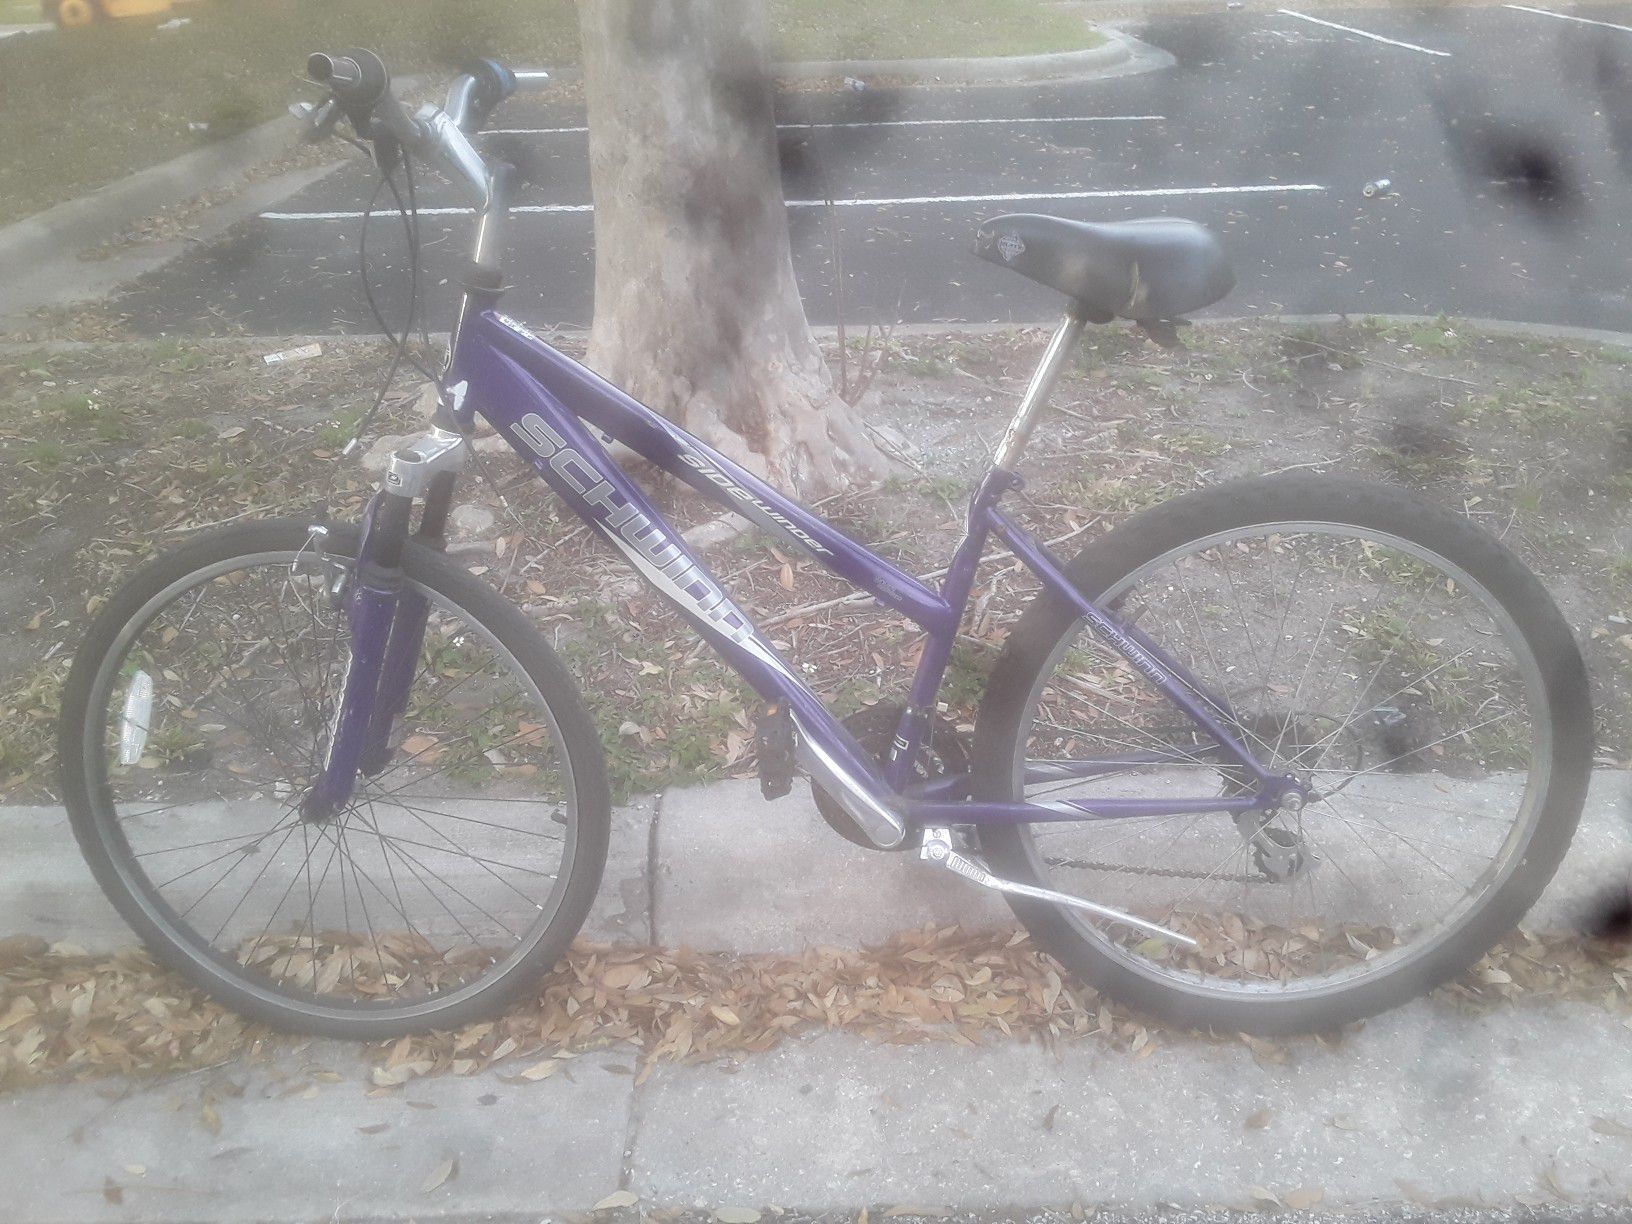 Schwinn bicycle